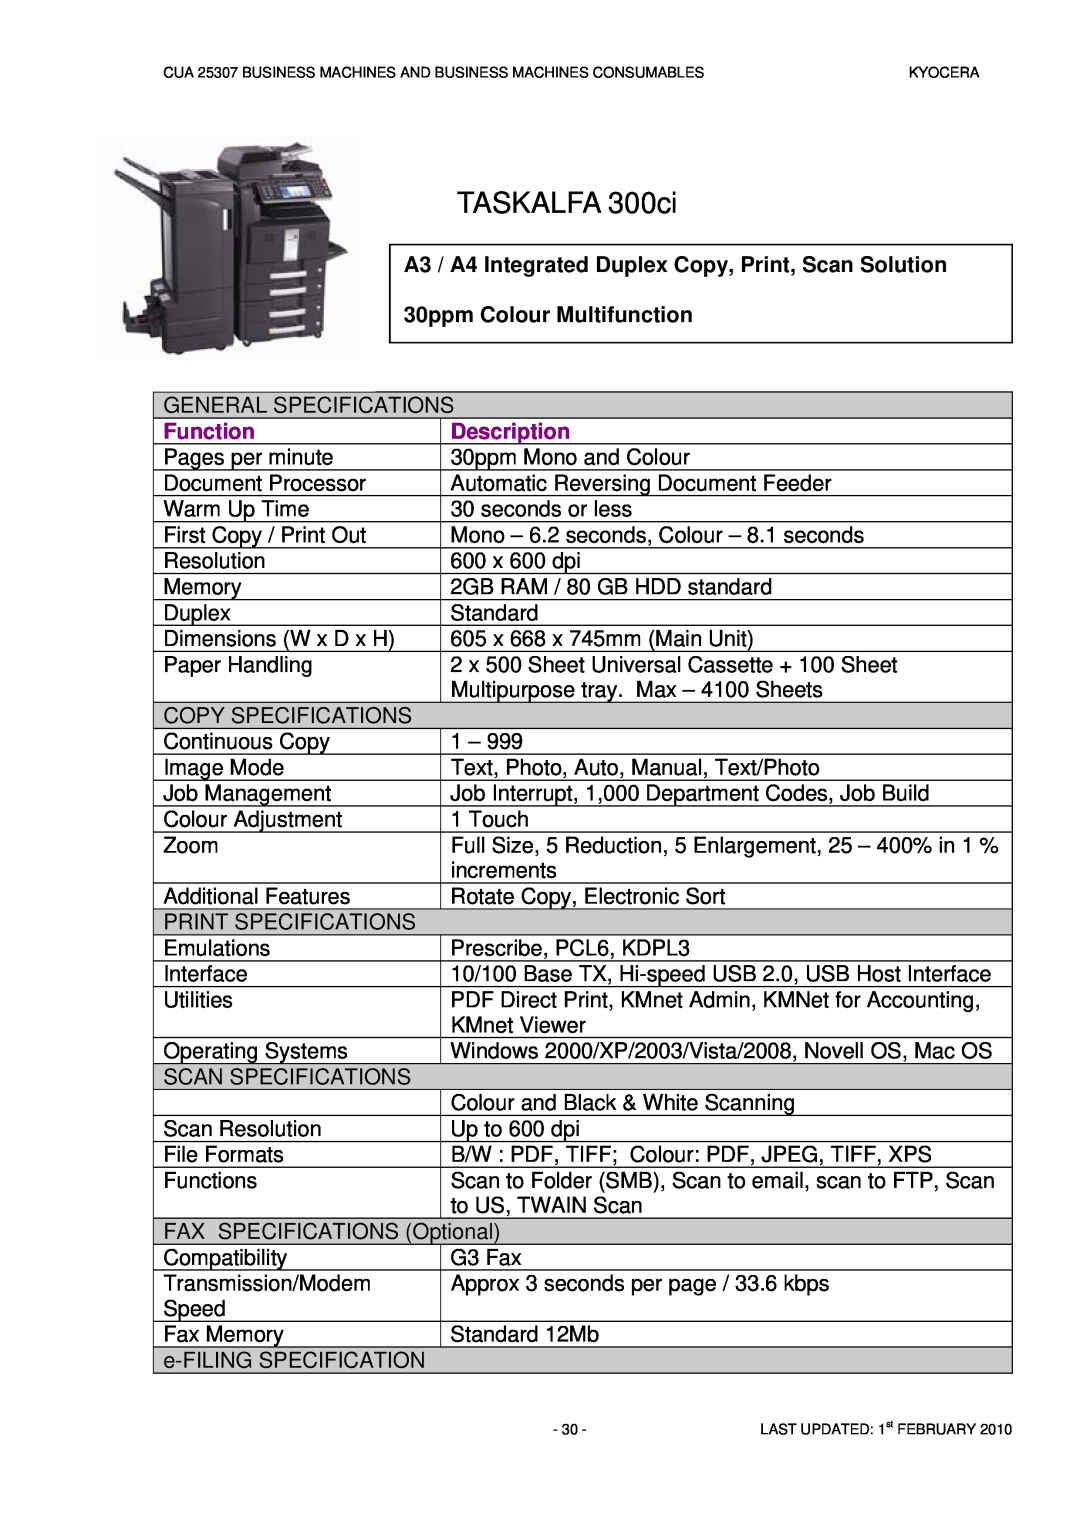 Kyocera CUA 25307 manual TASKALFA 300ci, 30ppm Colour Multifunction, Function, Description 